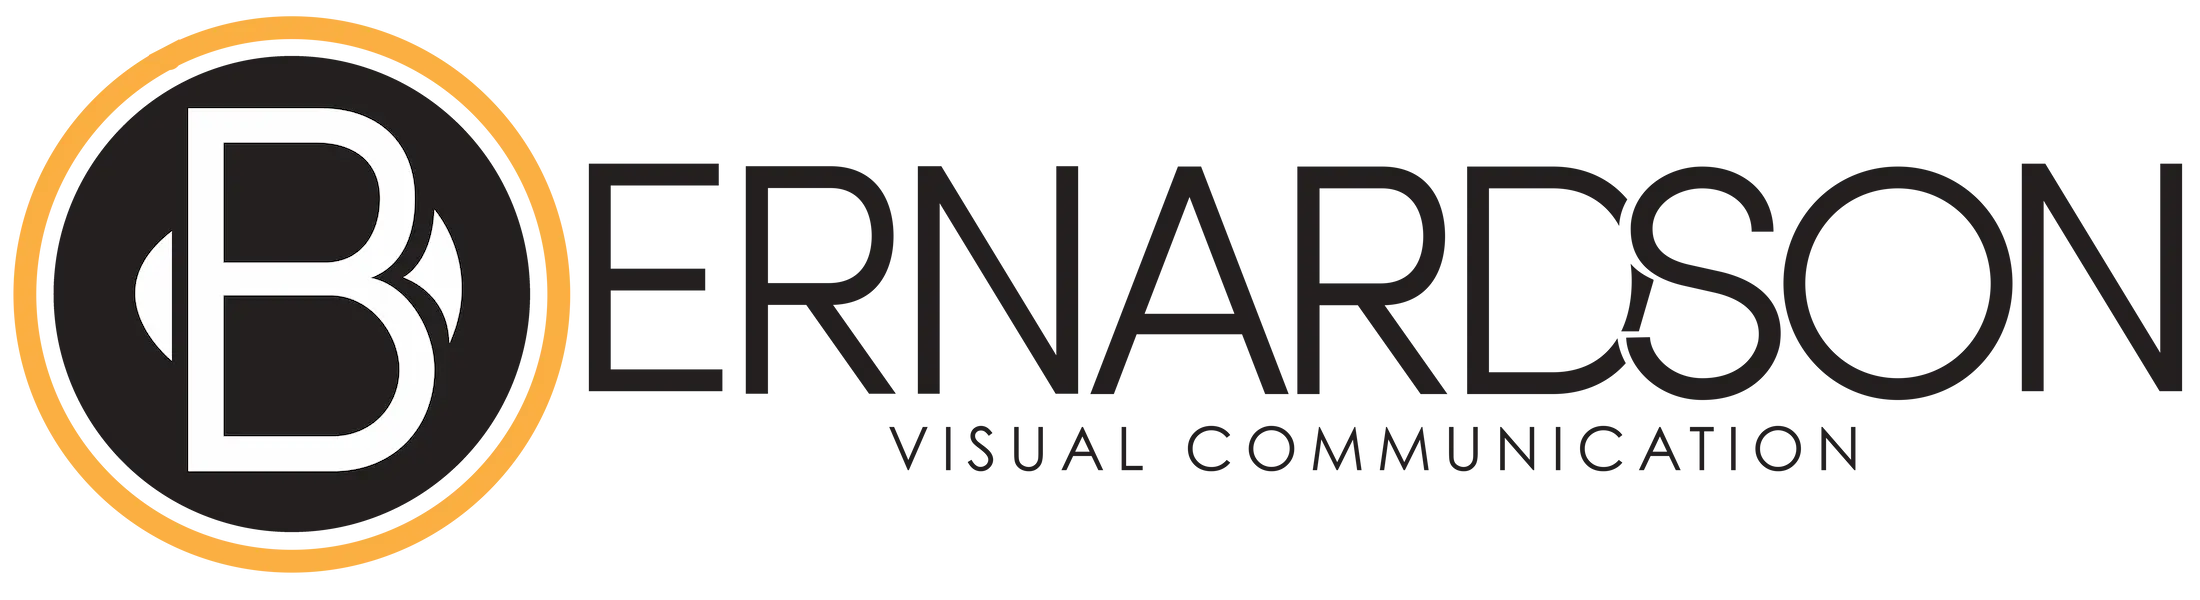 Video and Photo Production – Bernardson - Visual Communication